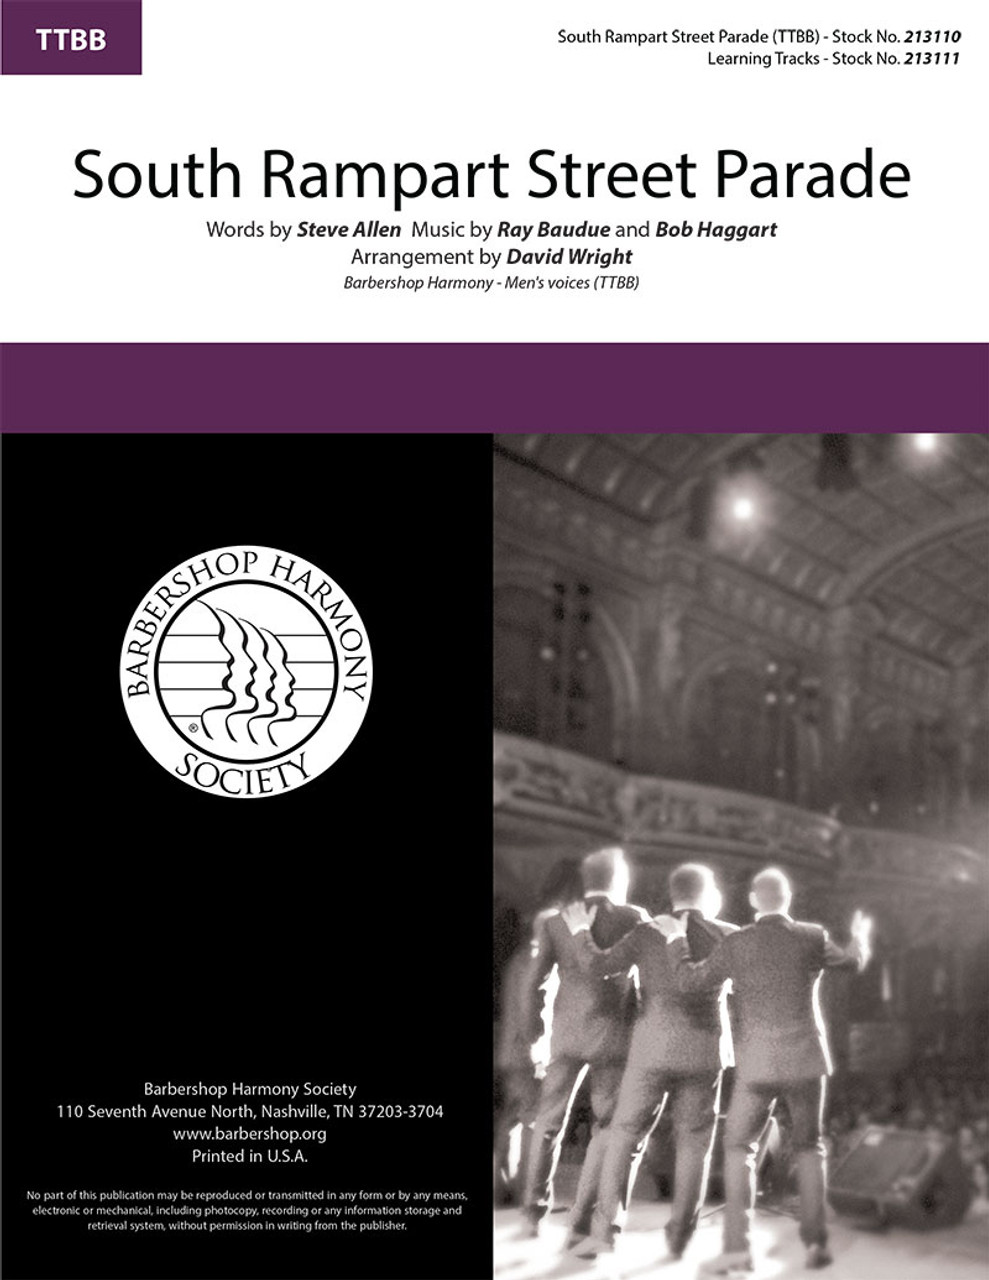 South Rampart Street Parade (TTBB) (arr. Wright)